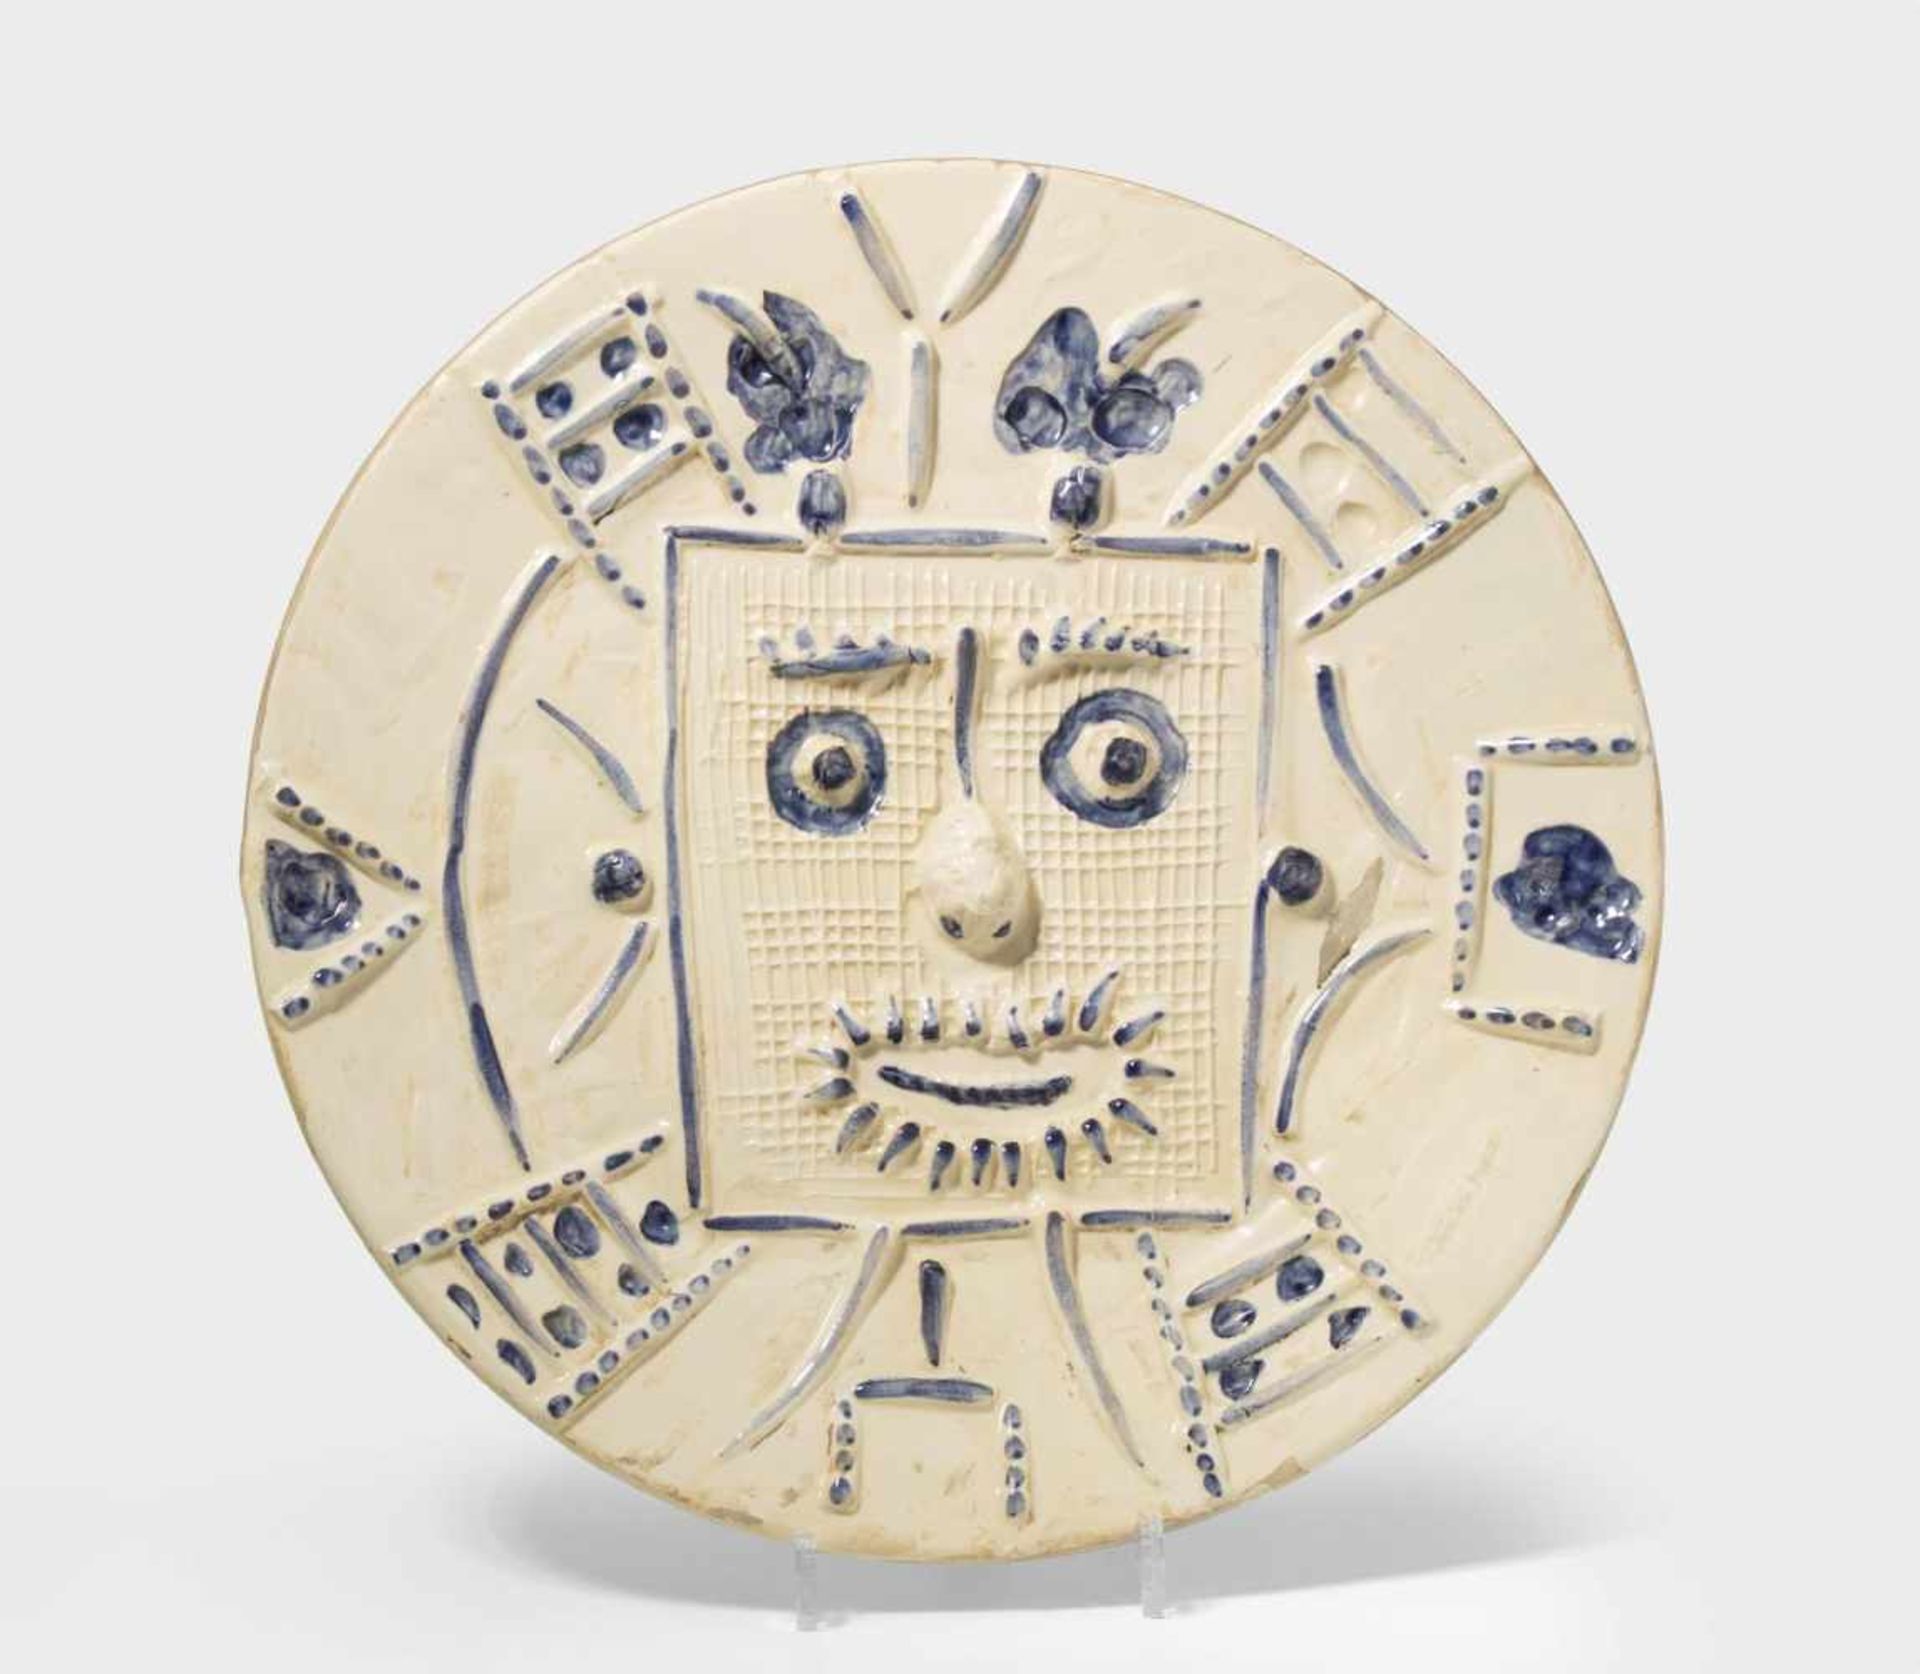 Picasso, Pablo(Malaga 1881–1973 Mougins)"Face in a square". 1956. Runder Keramikteller, Engobe-